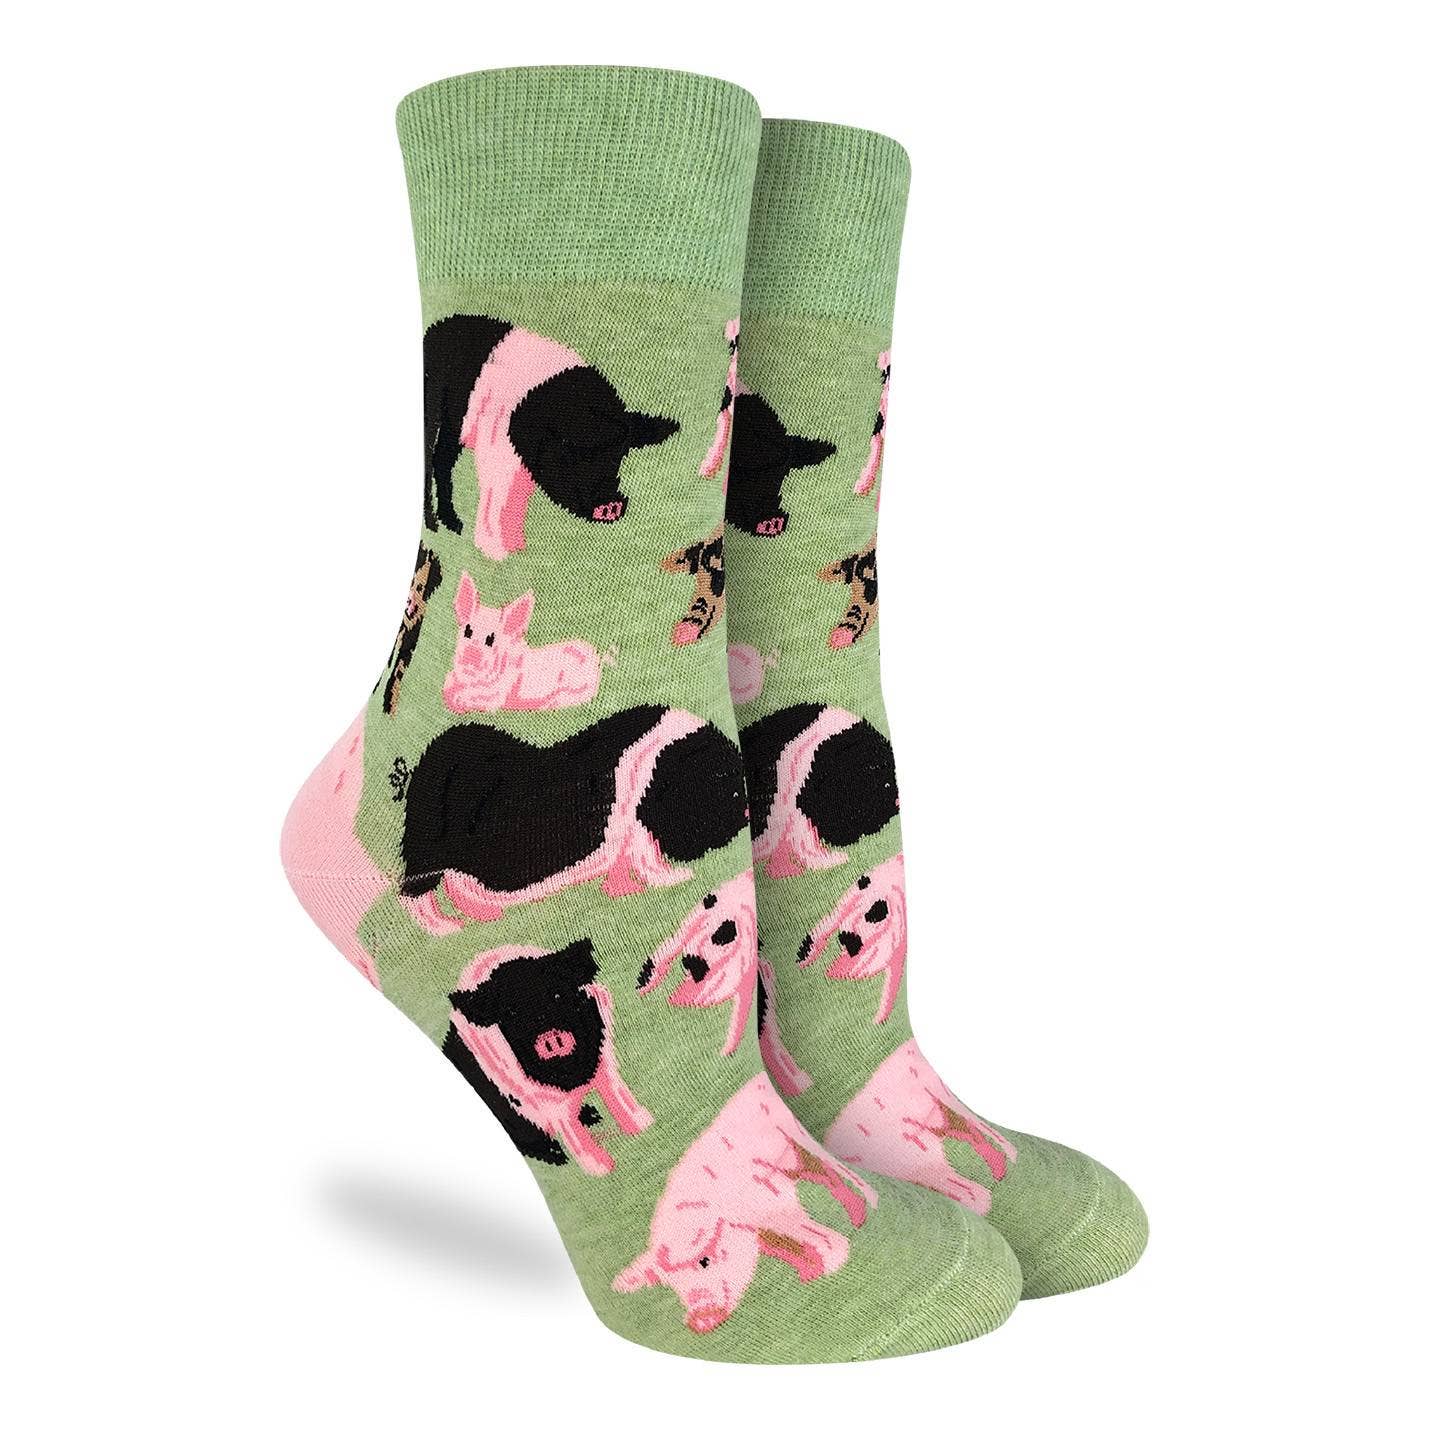 Other Goodies Women's Pigs Socks